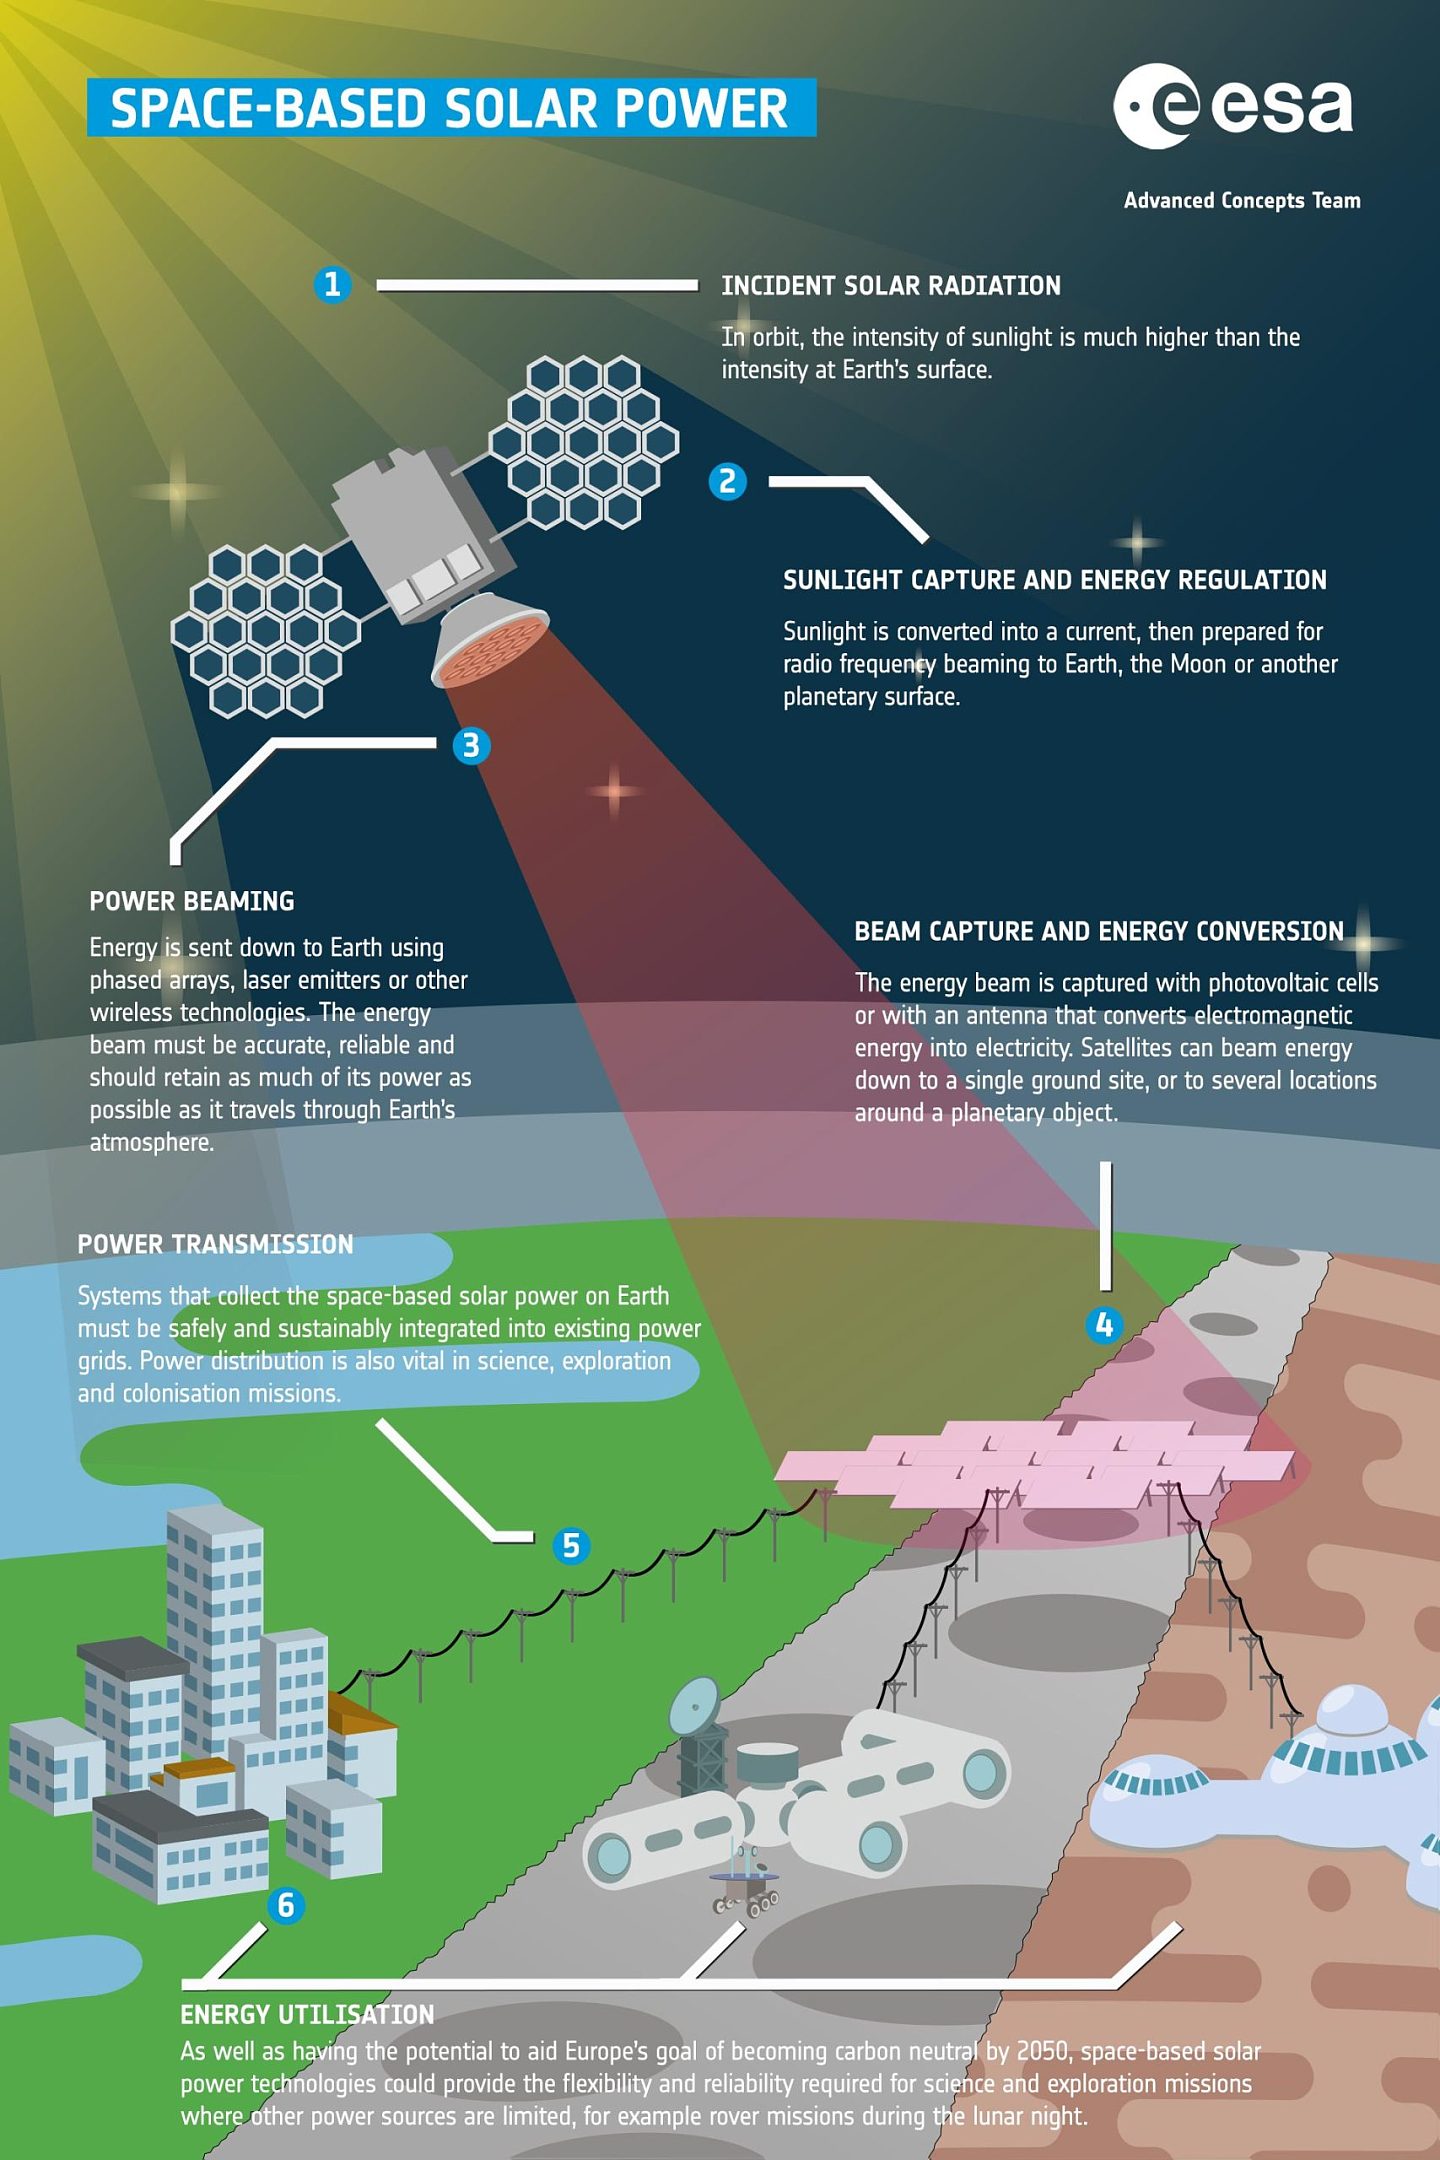 ESA正在研究在轨道收集太阳能并将其传送到地面使用的可行性 - 2